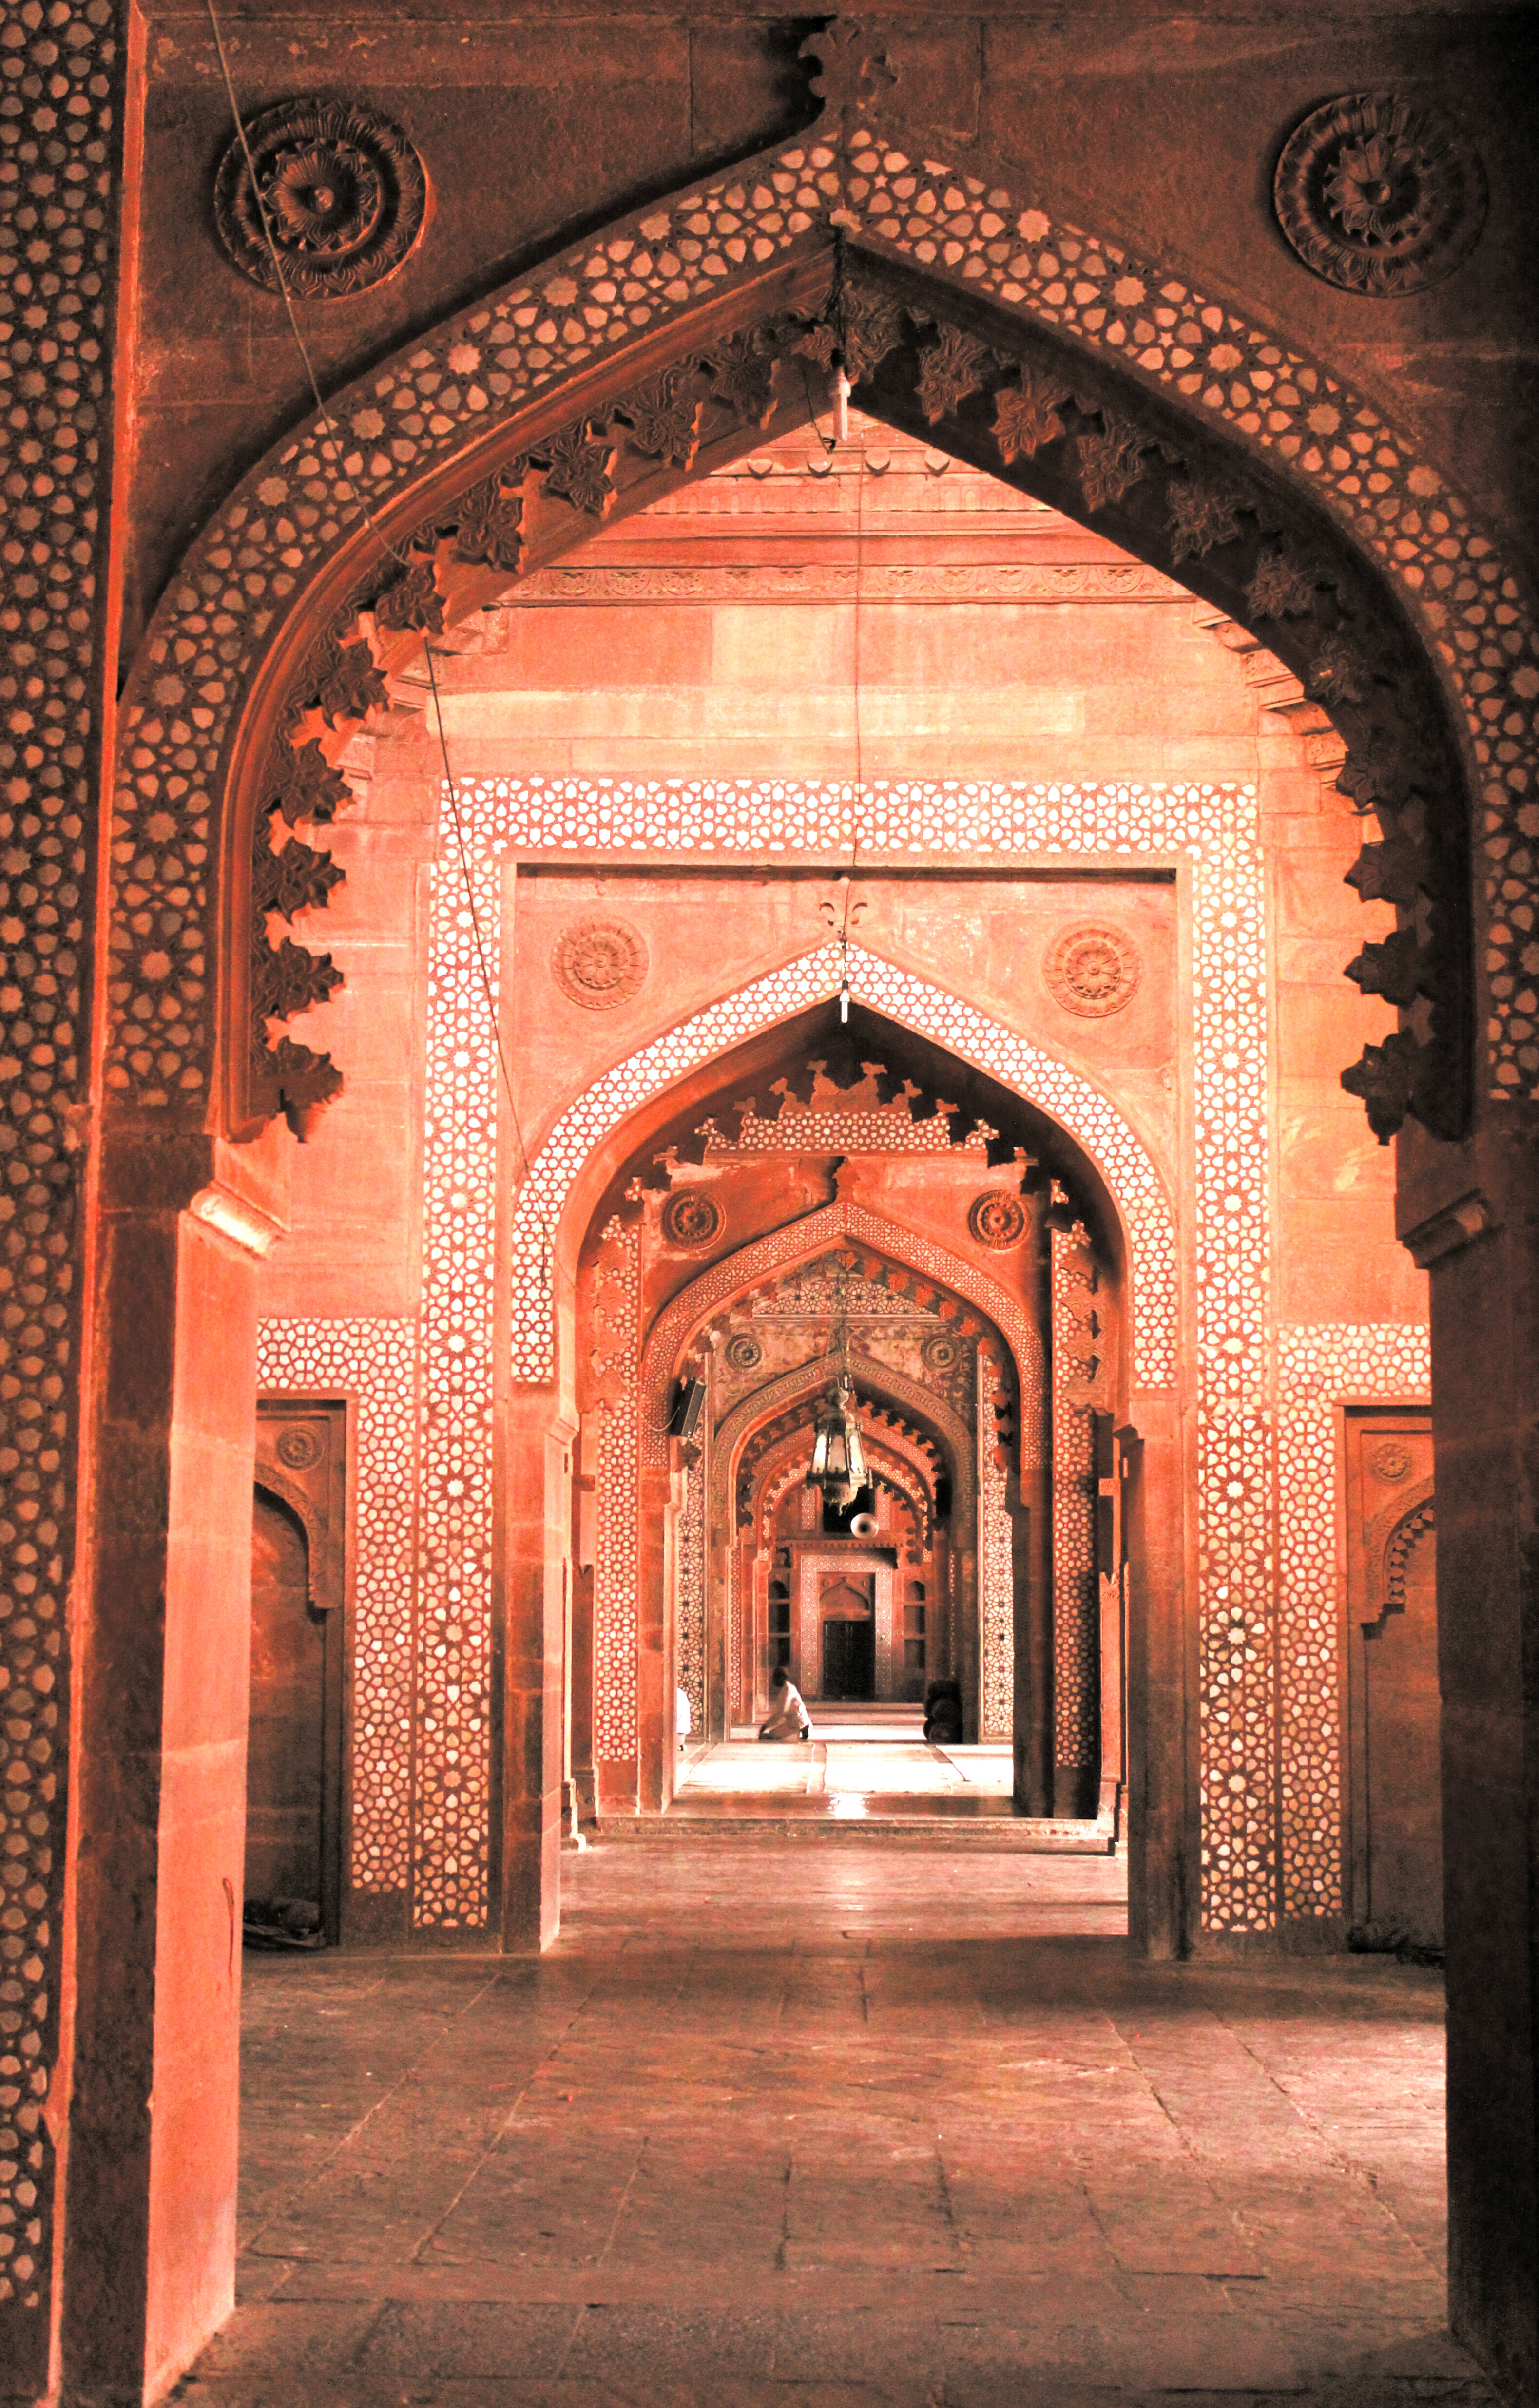 Insides of the Fatepur Shikri